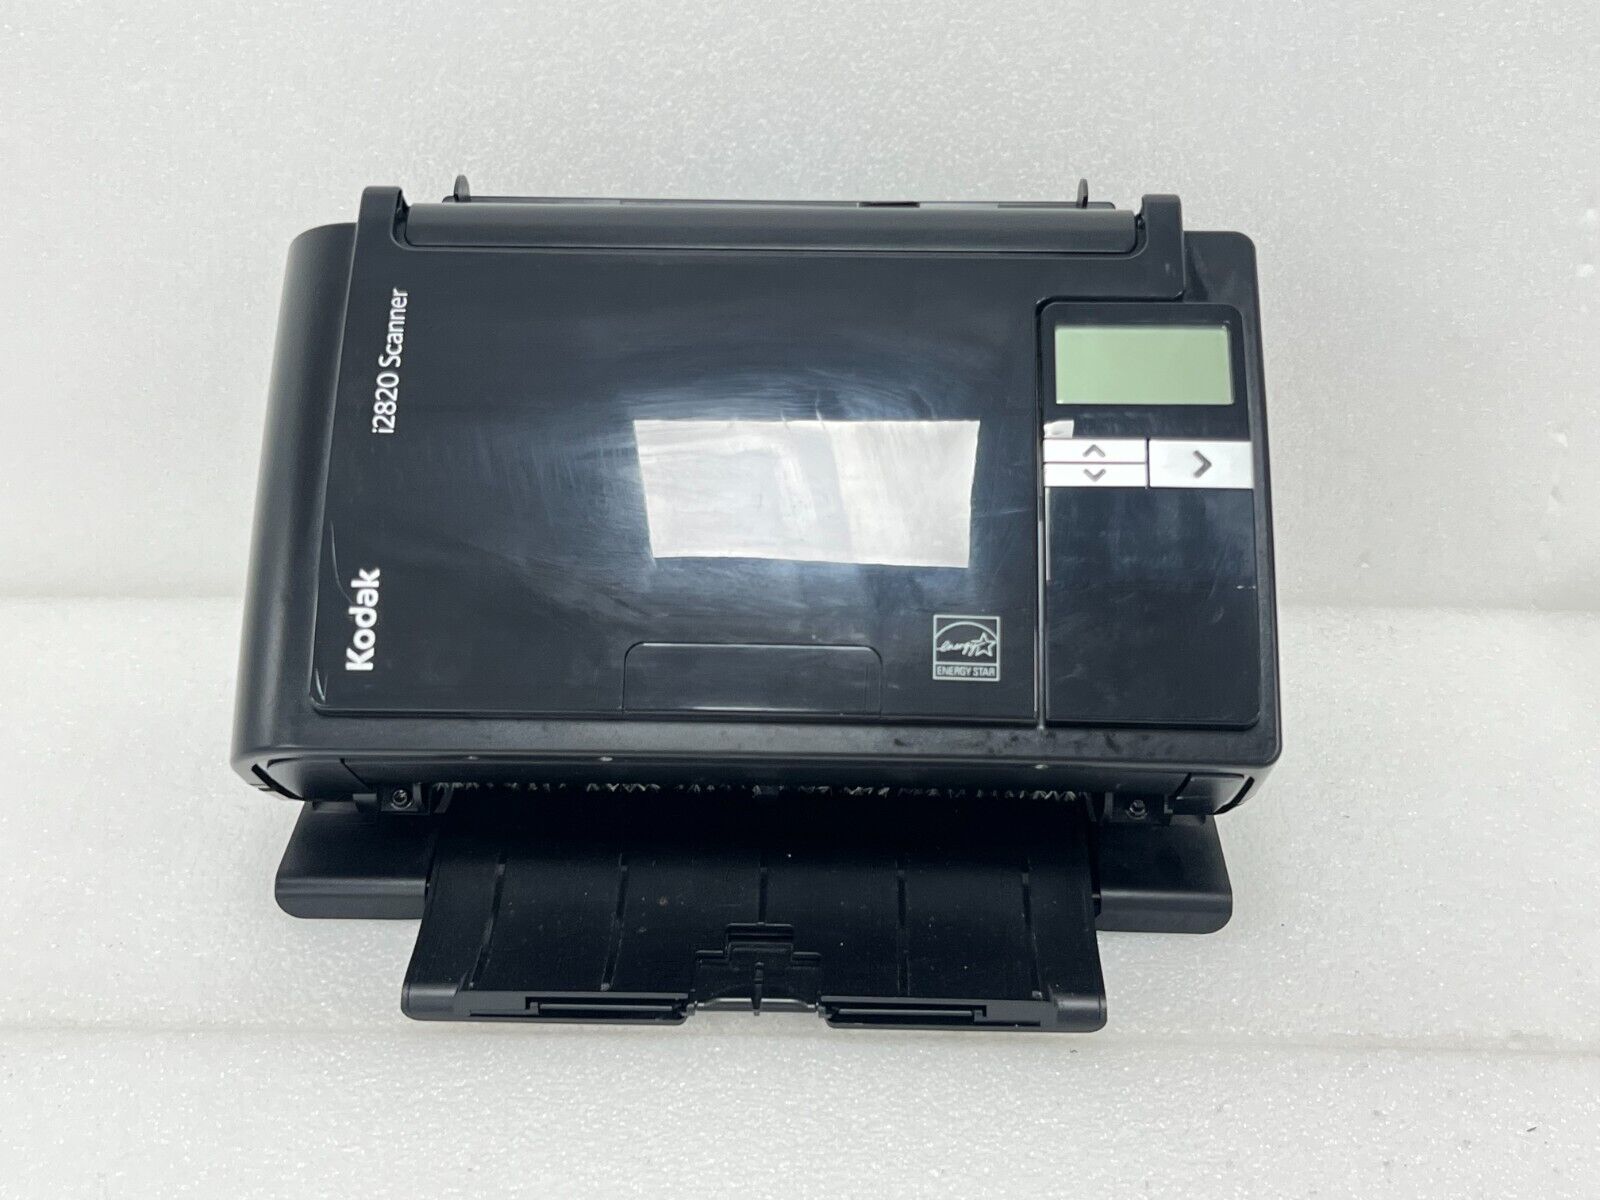 Kodak i2820 Sheet-fed Document Scanner, 300dpi / Great Condition